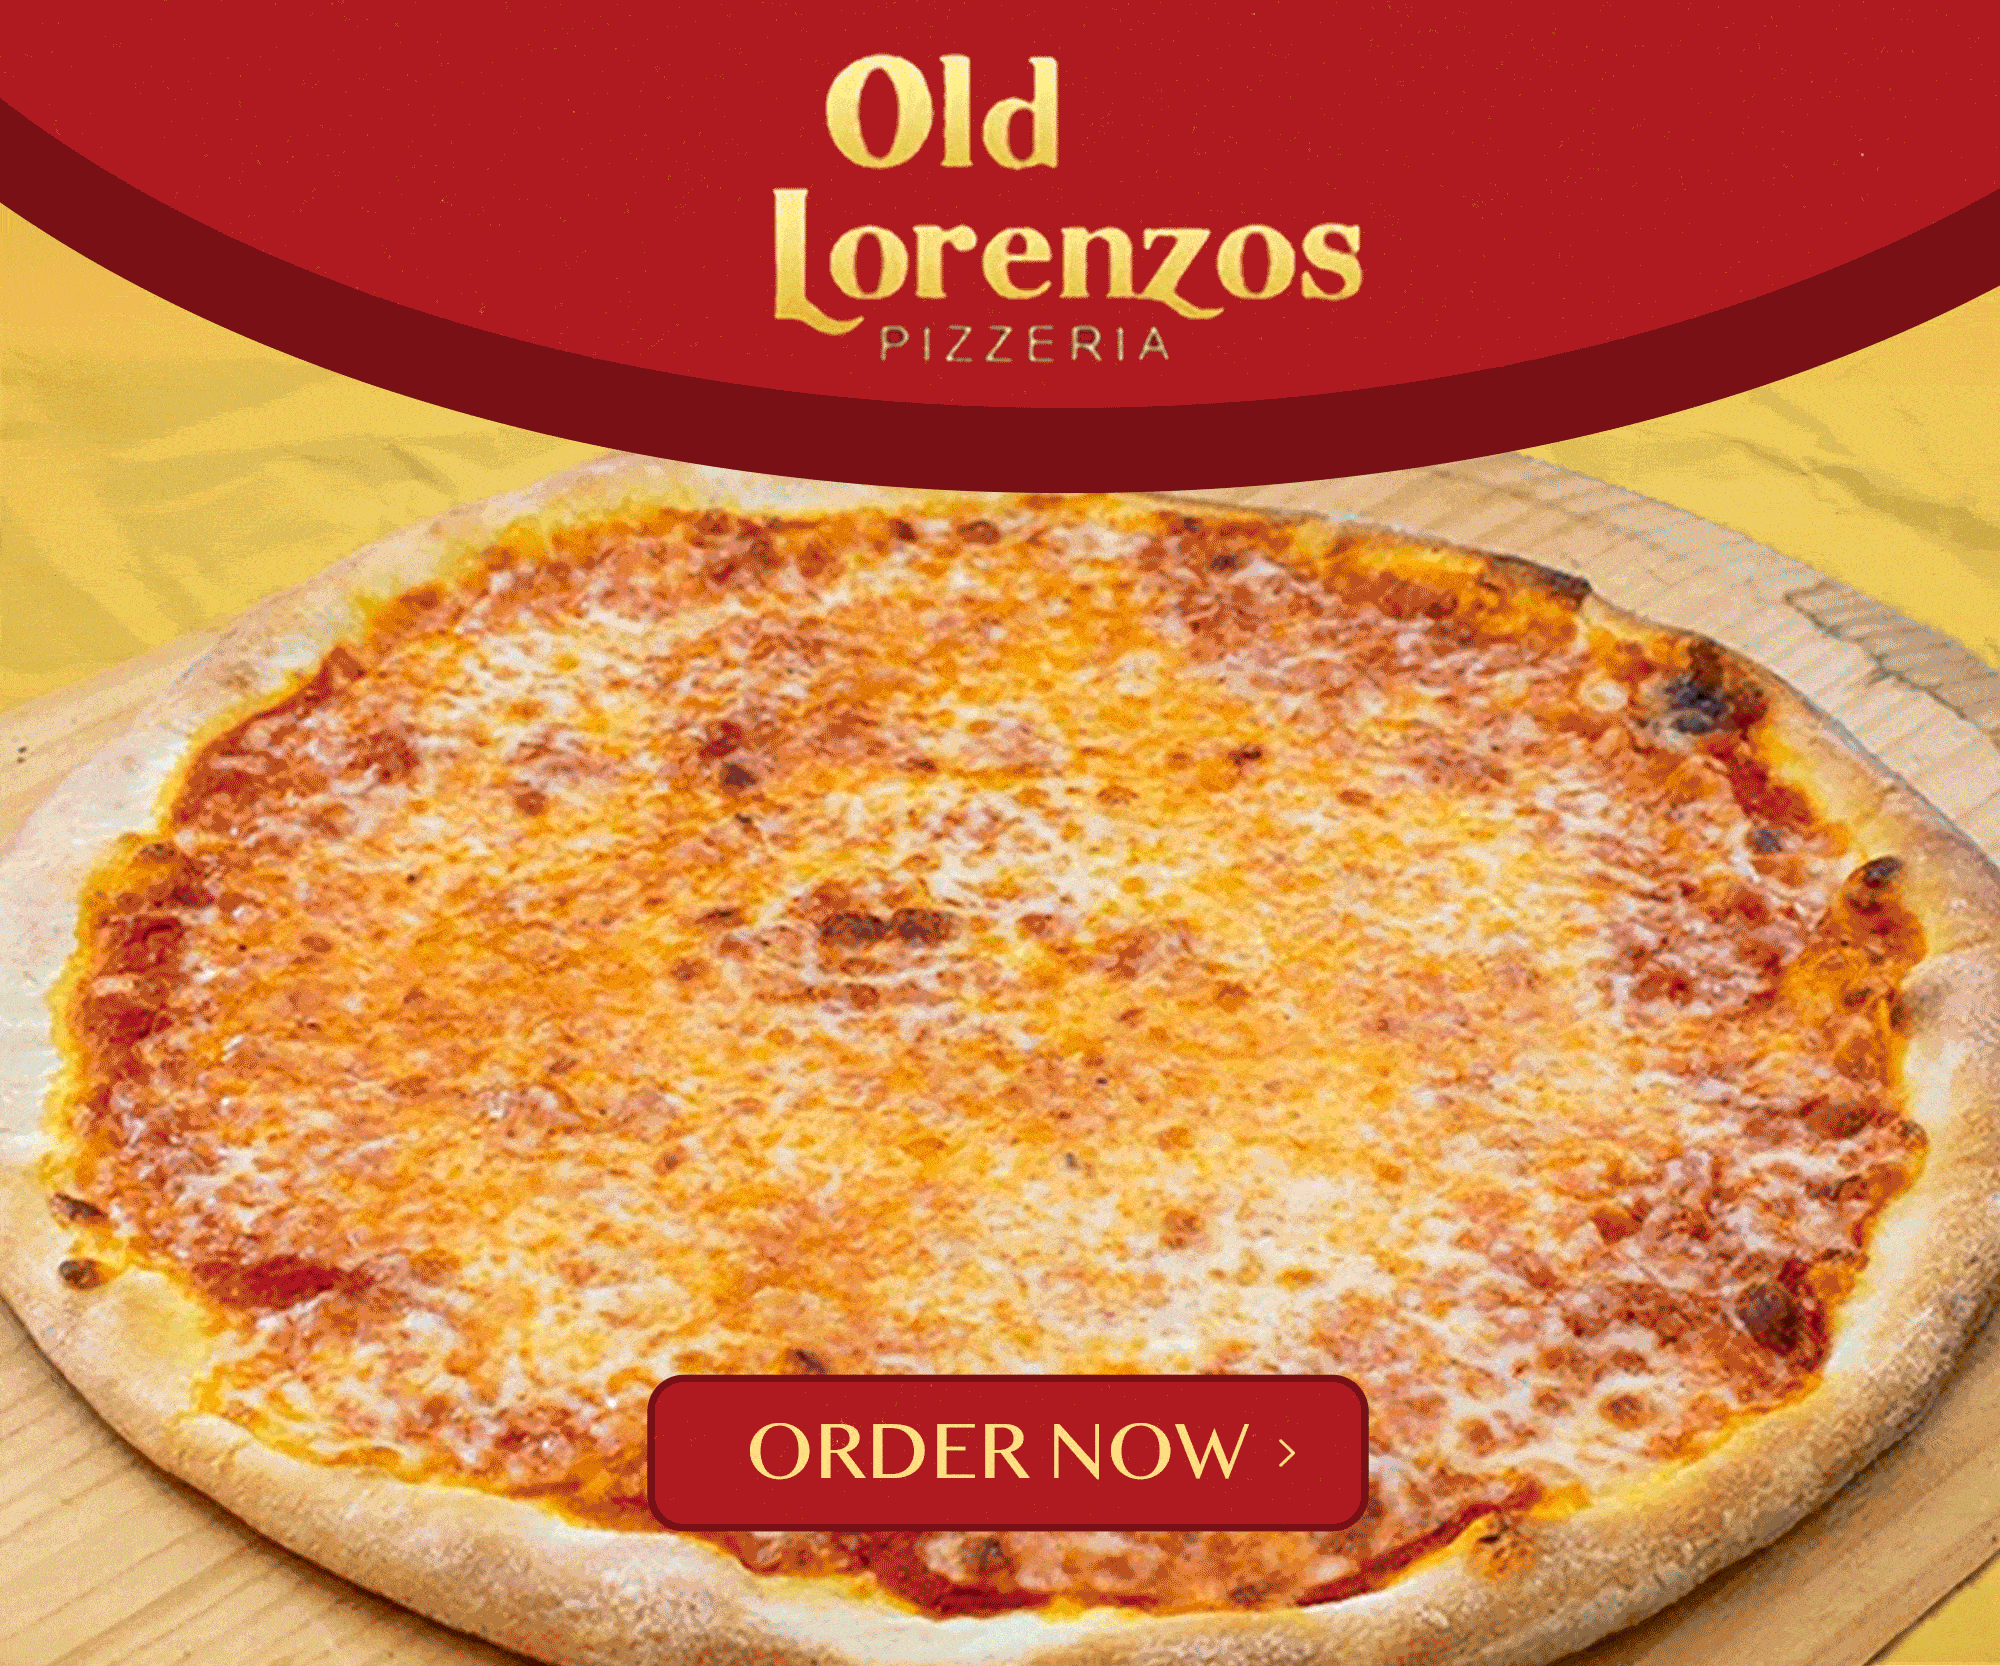 Old Lorenzos Pizza